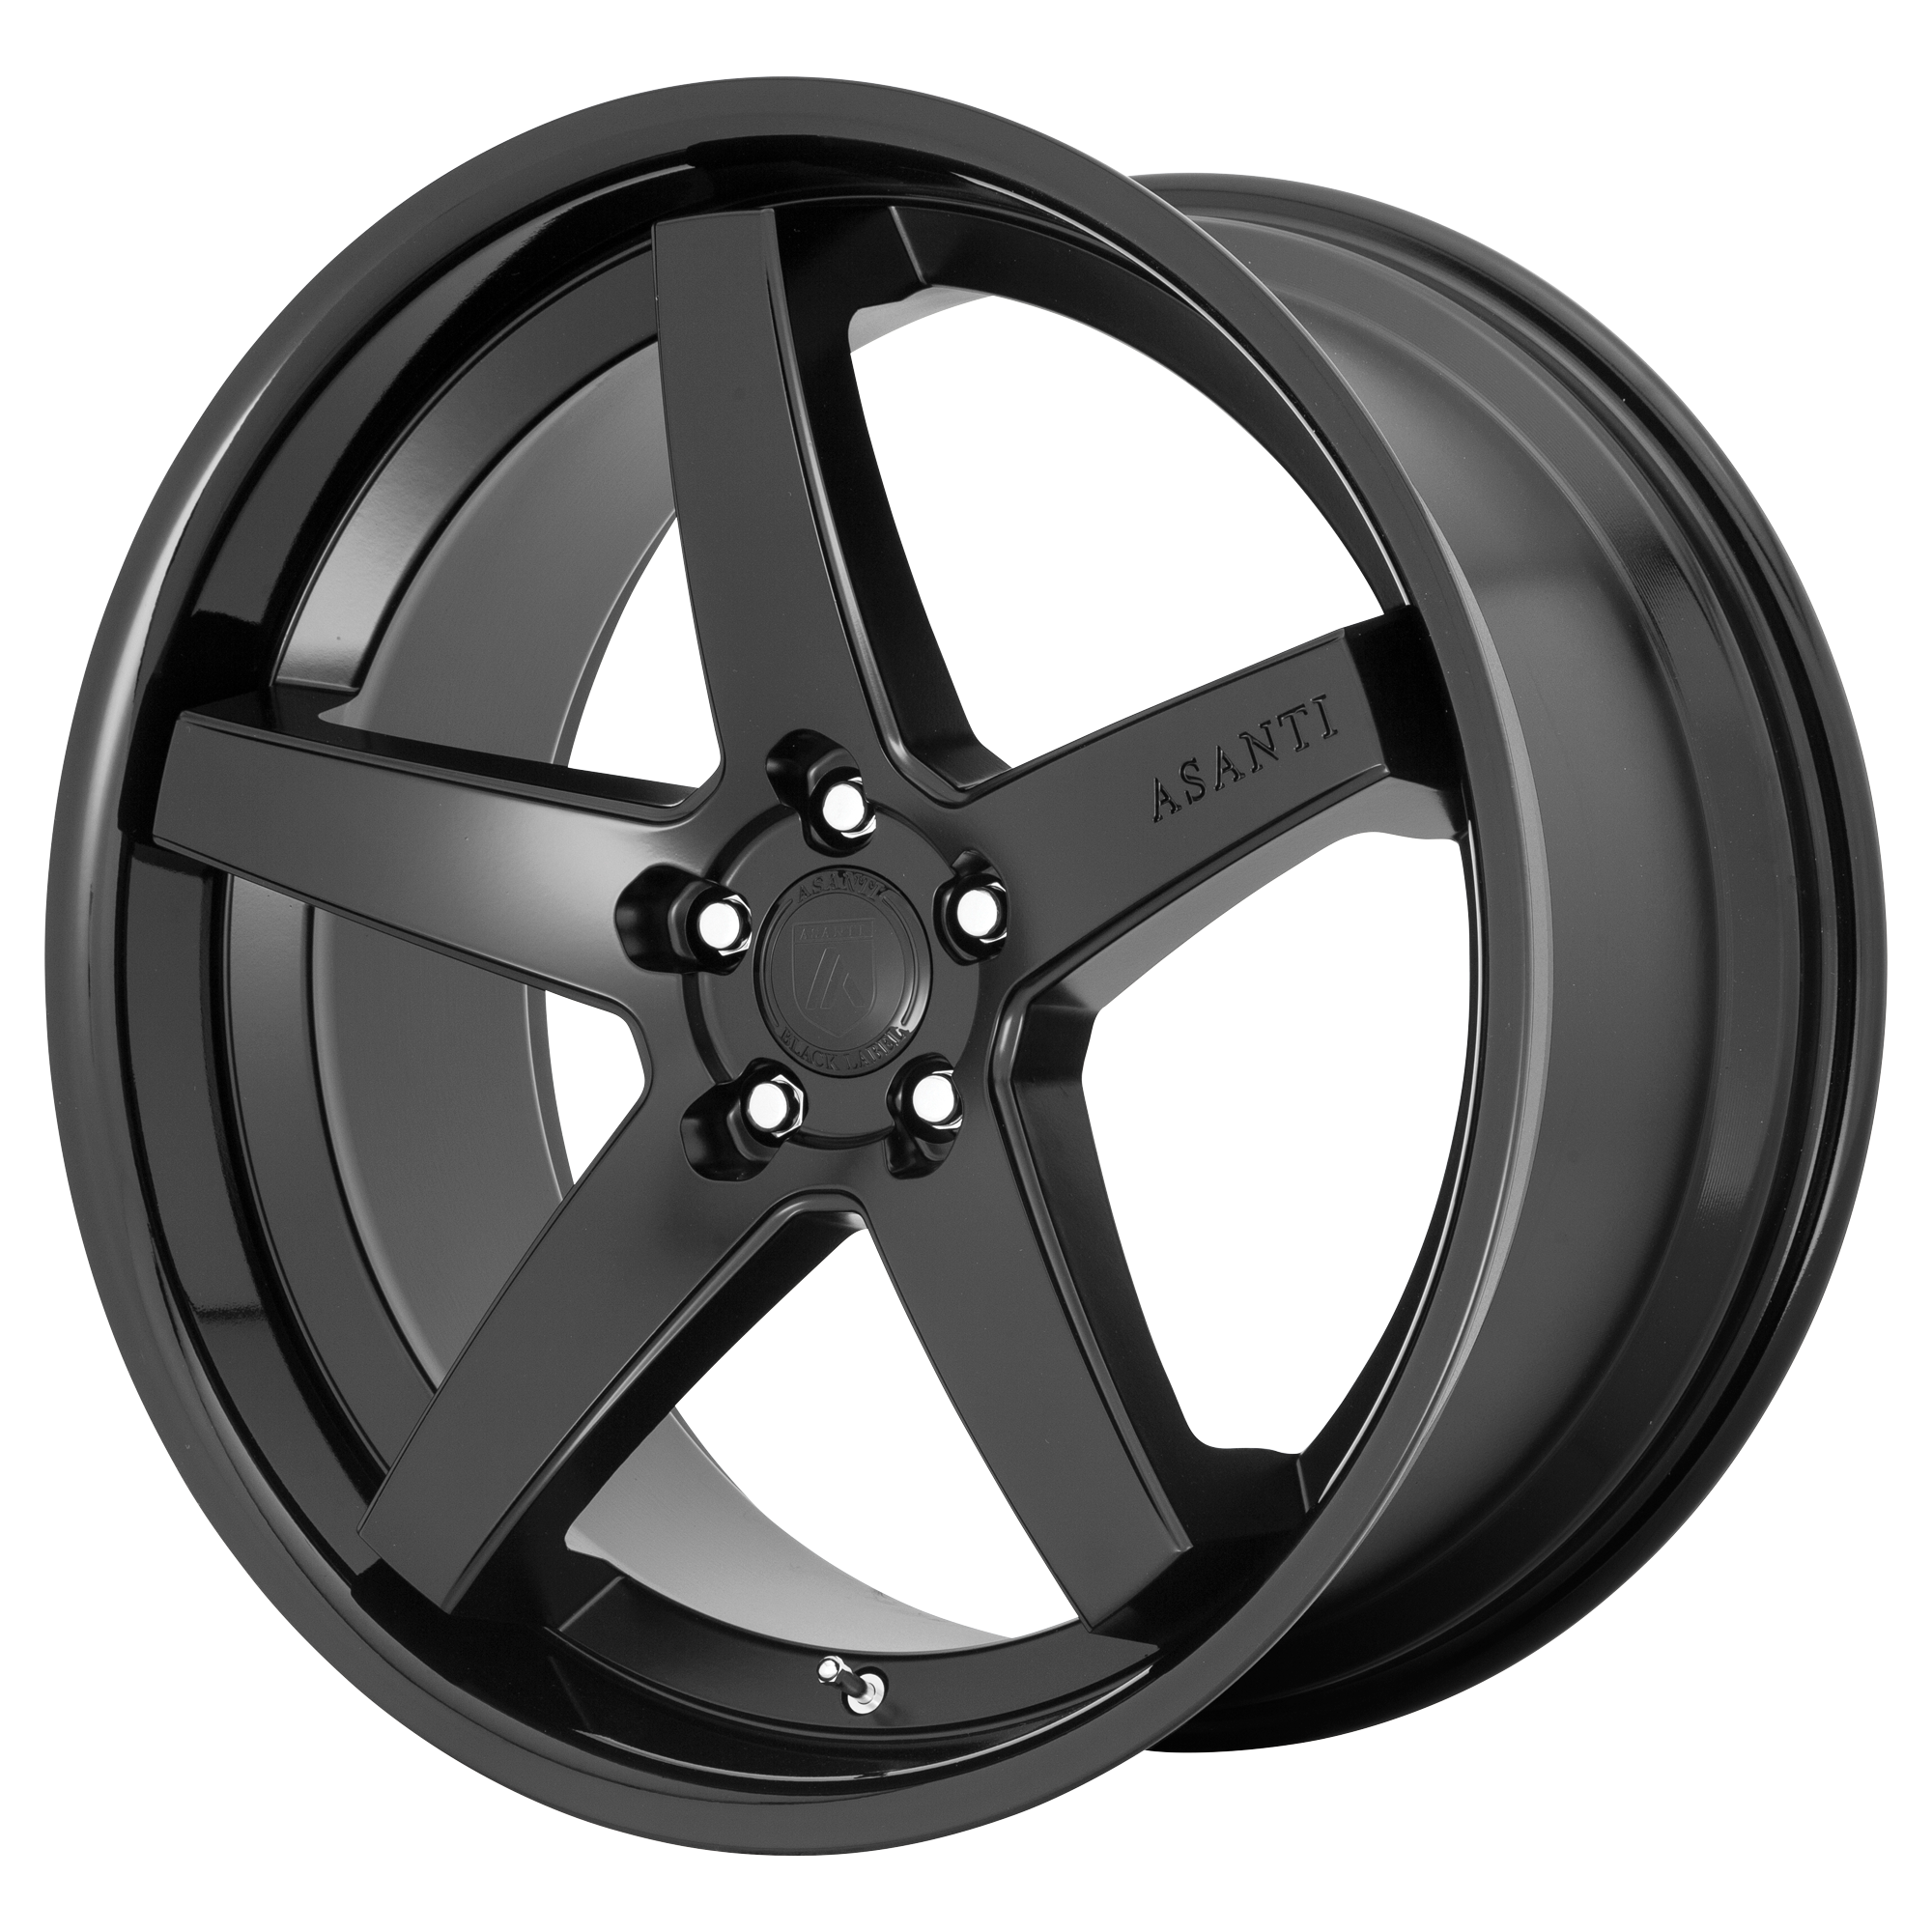 REGAL 20x10.5 5x120.00 SATIN BLACK W/ GLOSS BLACK LIP (38 mm) - Tires and Engine Performance